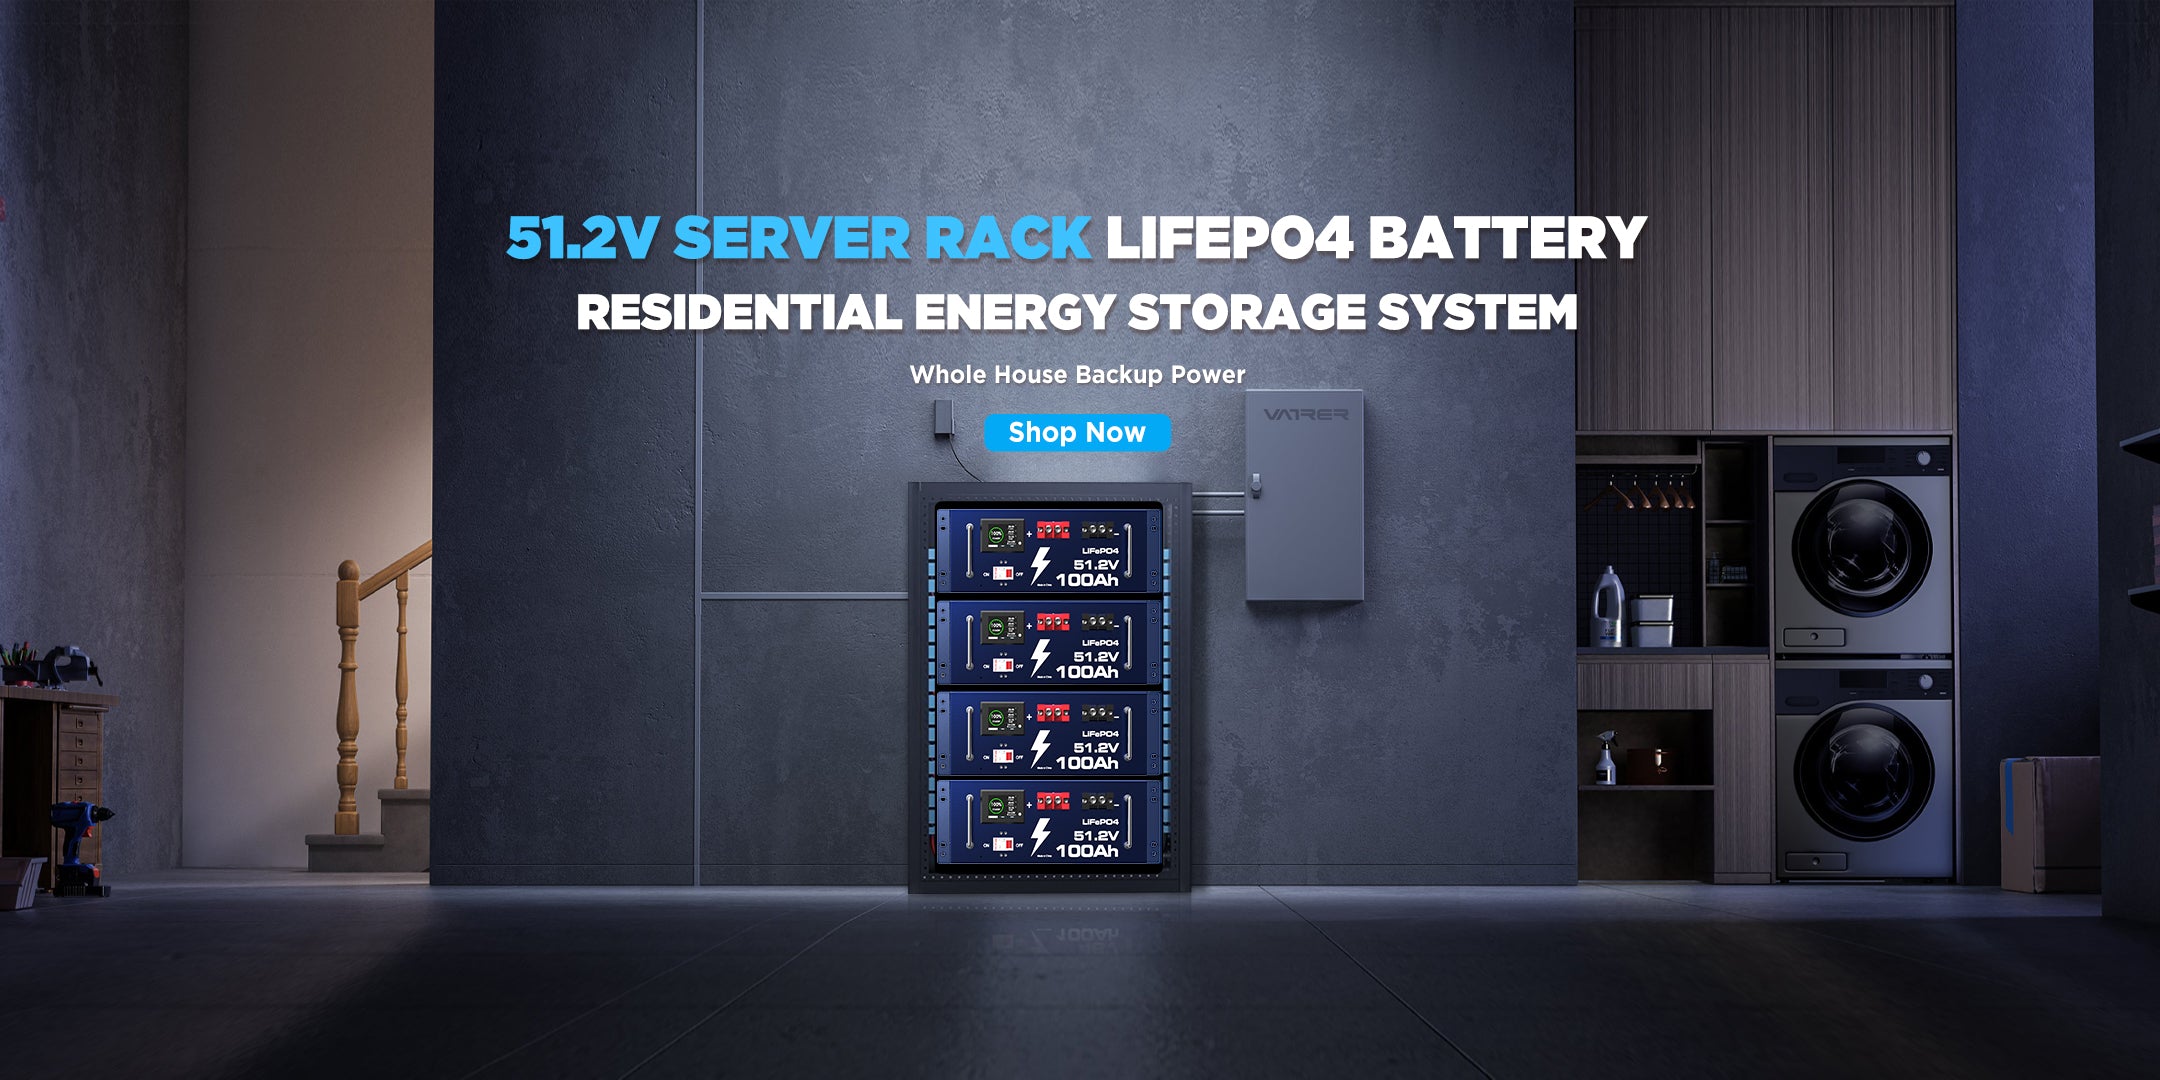 51.2V server rack LiFePo4 battery